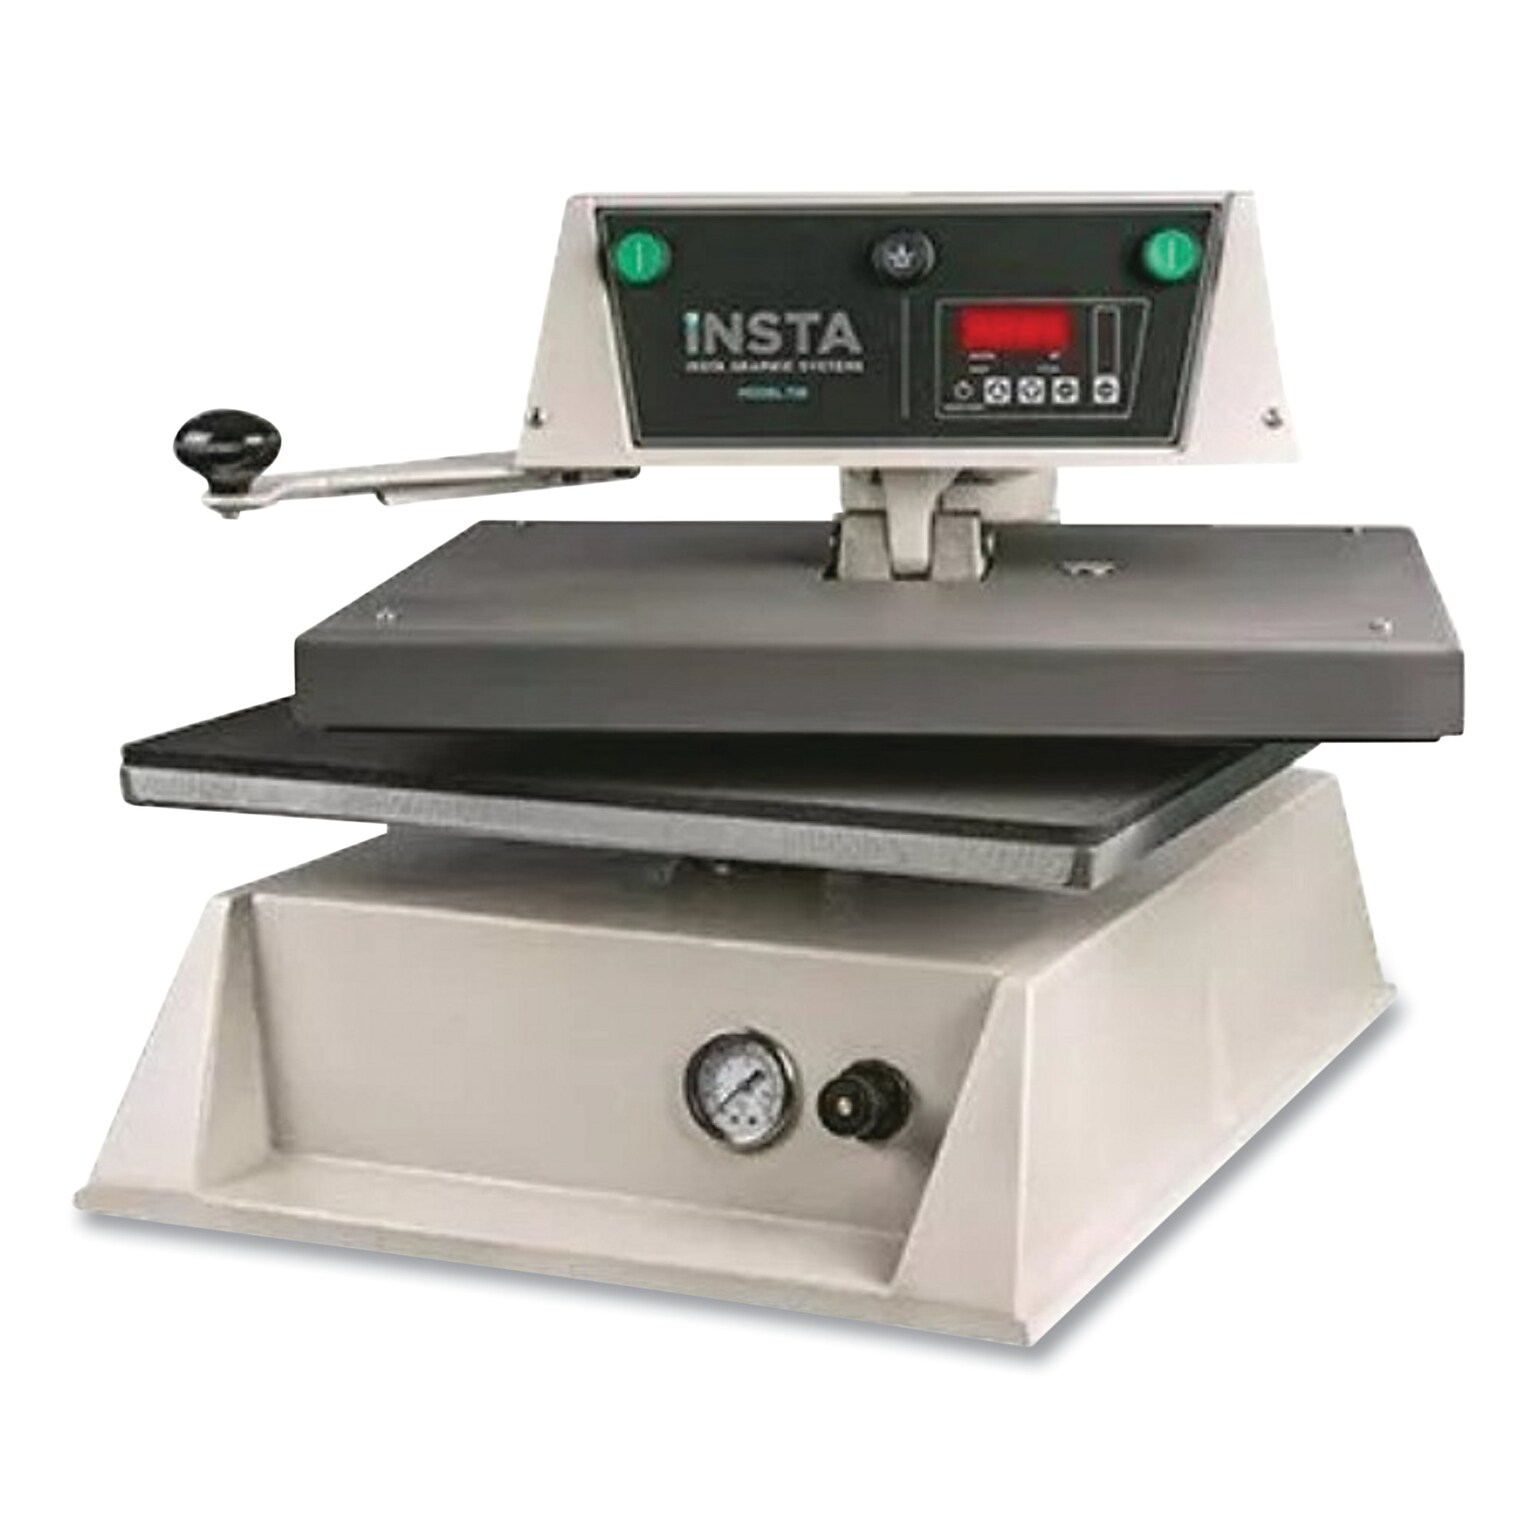 INSTA 728 Heat Press Machine, 33.13 x 29.88 x 26, Beige/Black